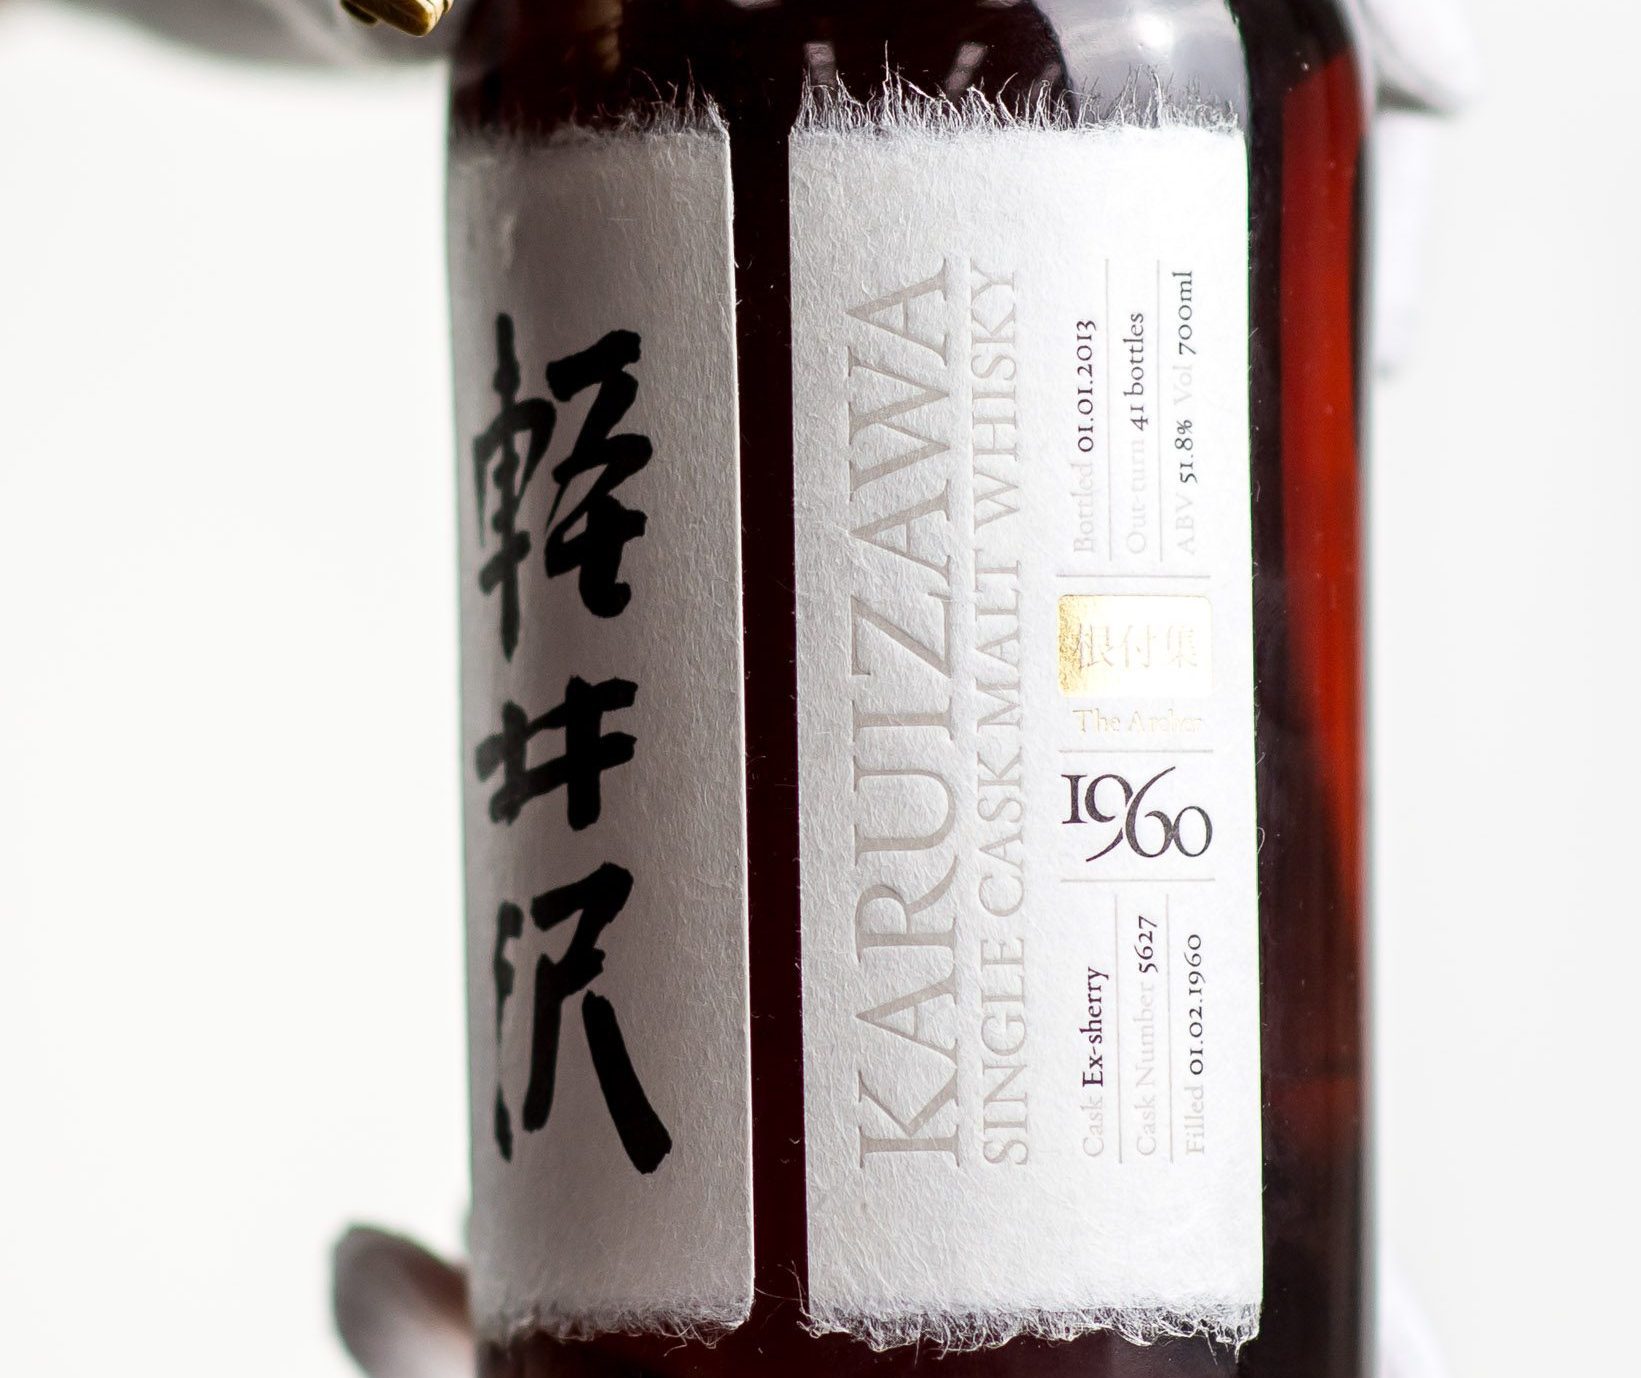 Rare Karuizawa whisky will go under the hammer at auction.